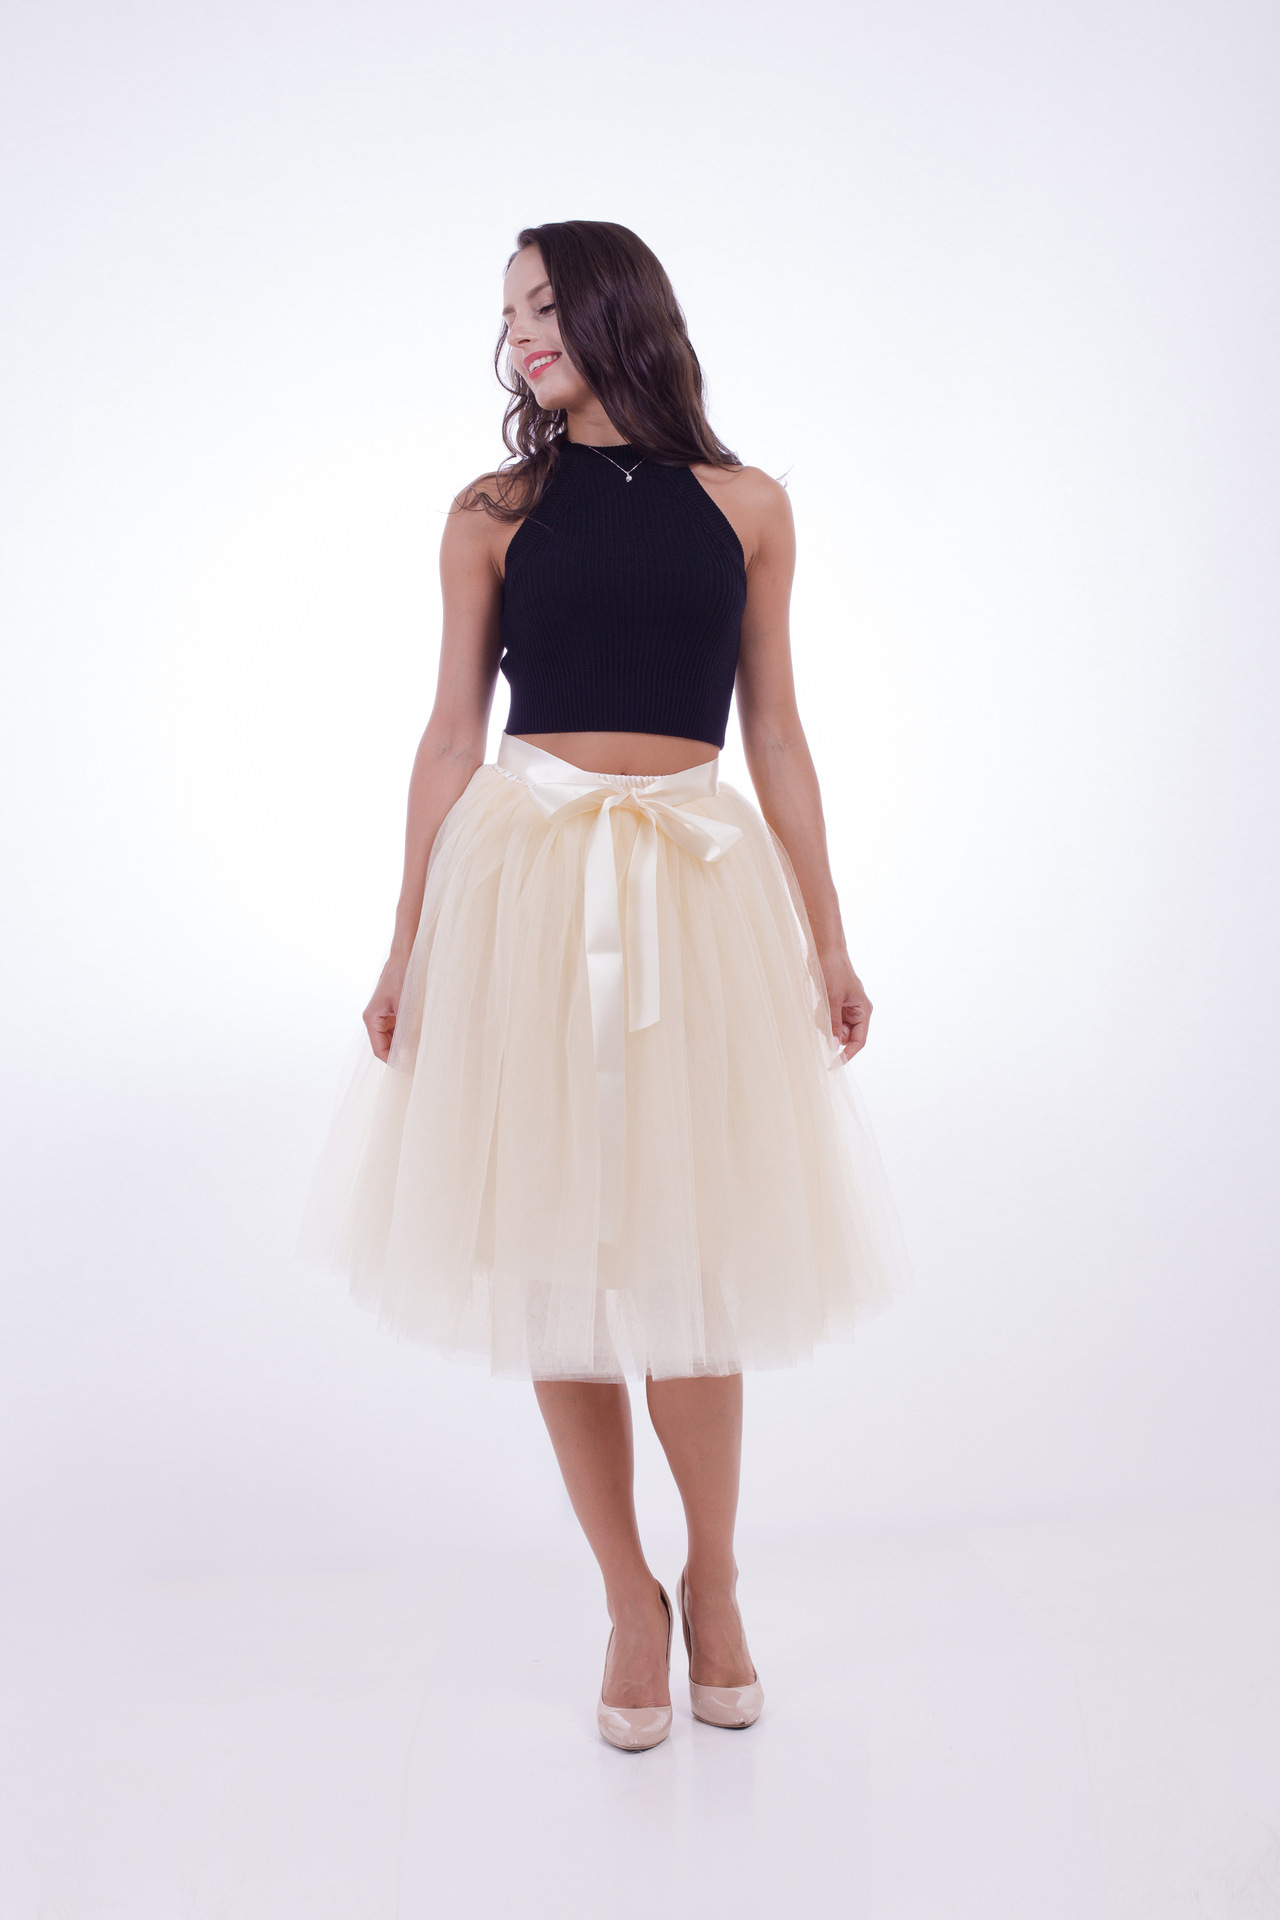 6 Layers Midi Tulle Skirts Womens Tutu Skirt Elegant Wedding Bridal Bridesmaid Skirt Lolita Under skirt Petticoat cream